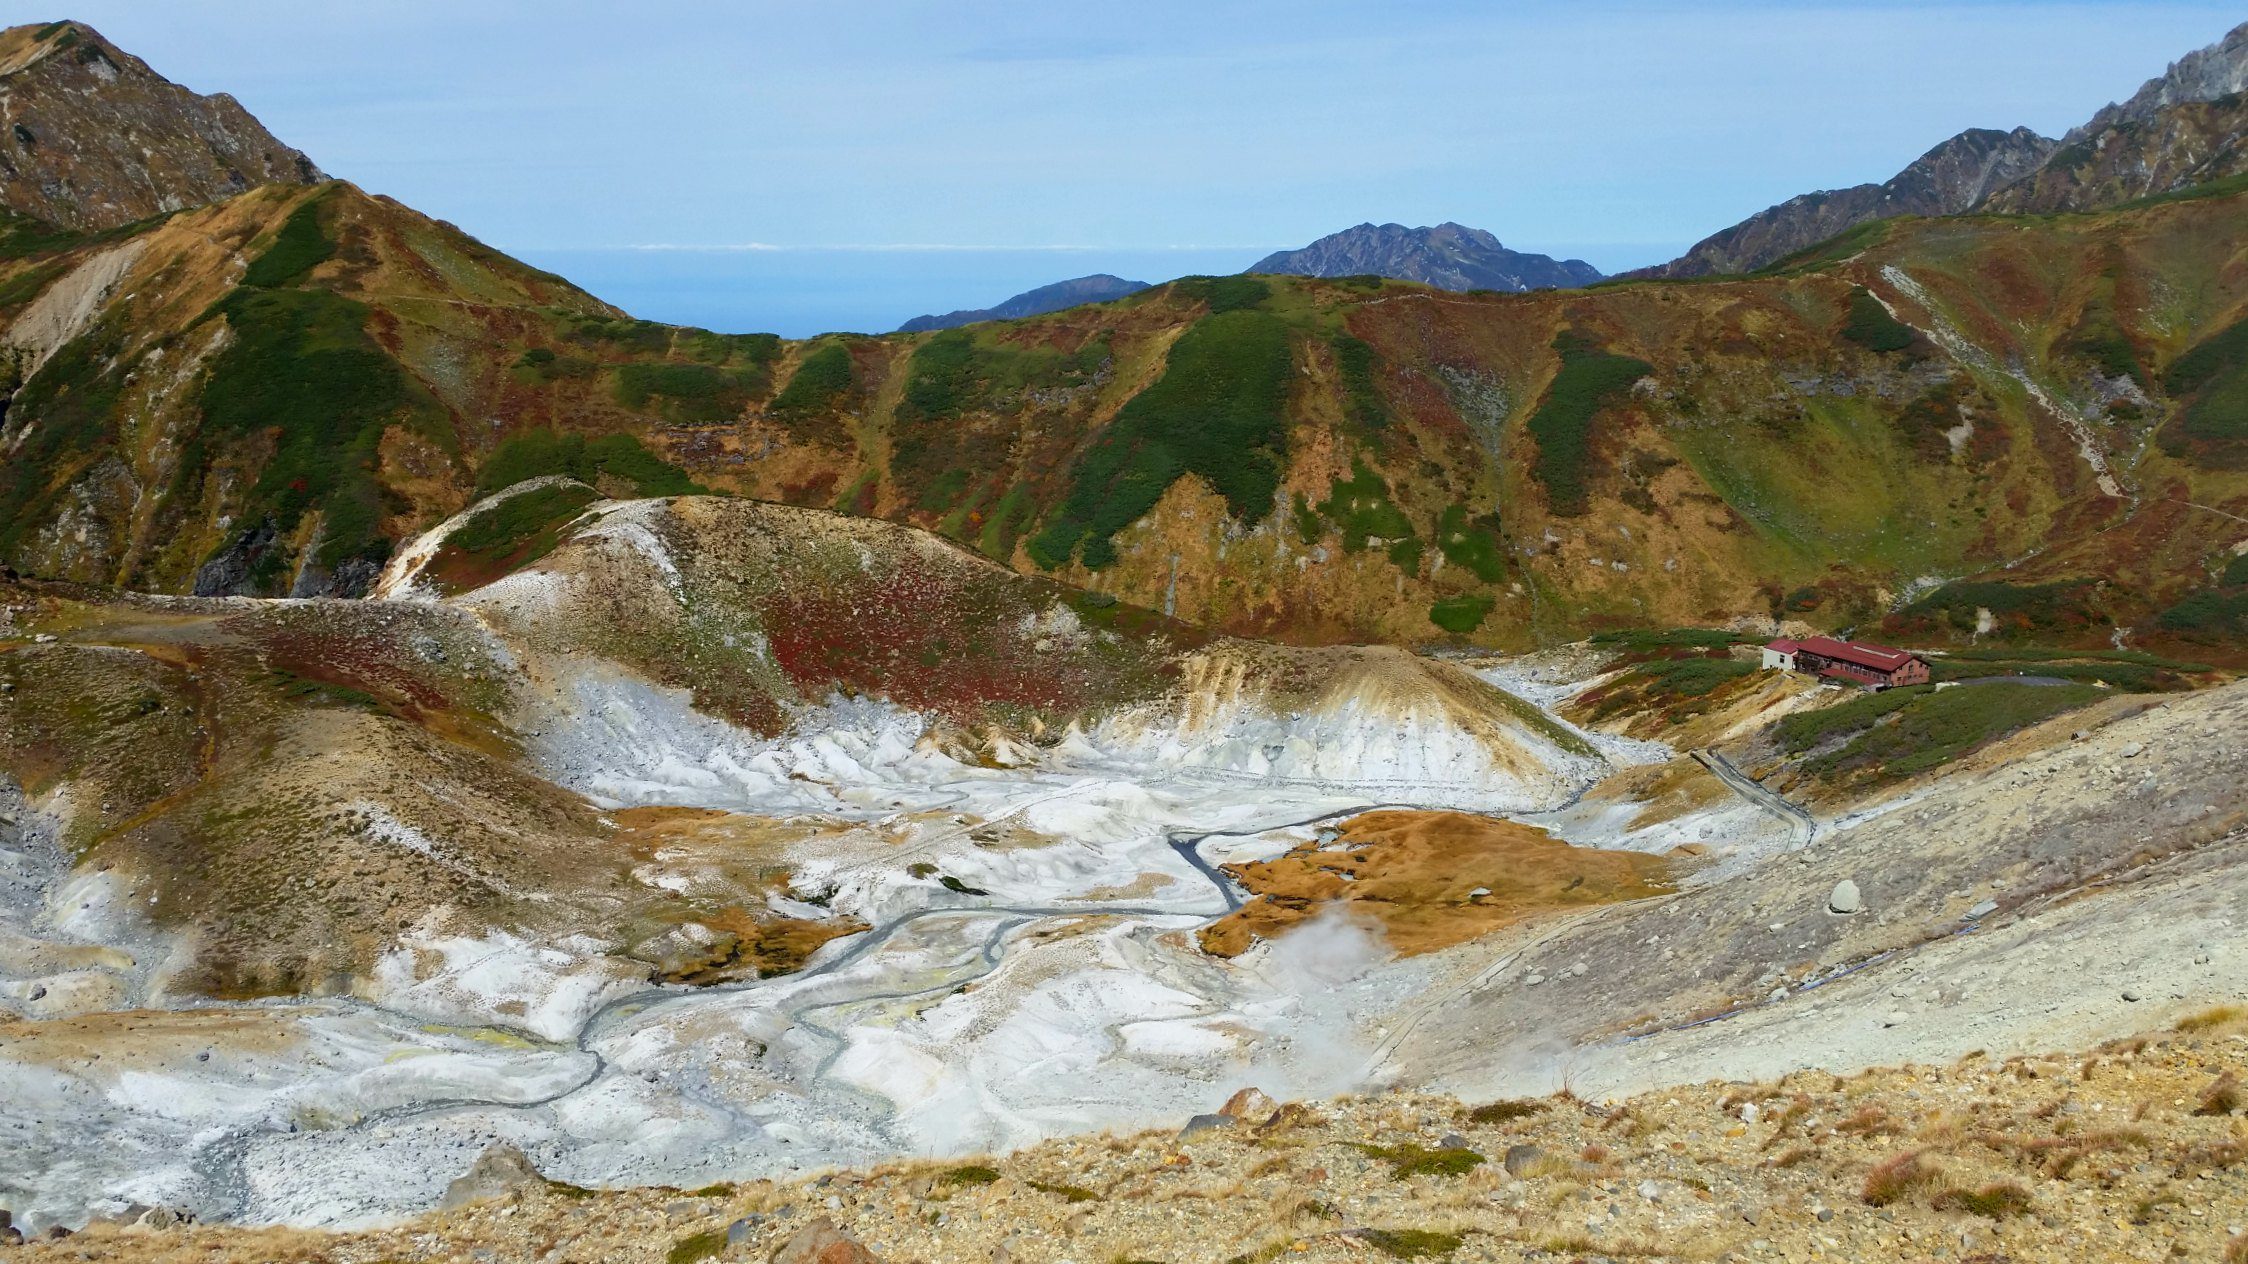 Hell Valley in Murodo on the Tateyama Kurobe Alpine Route in Japan